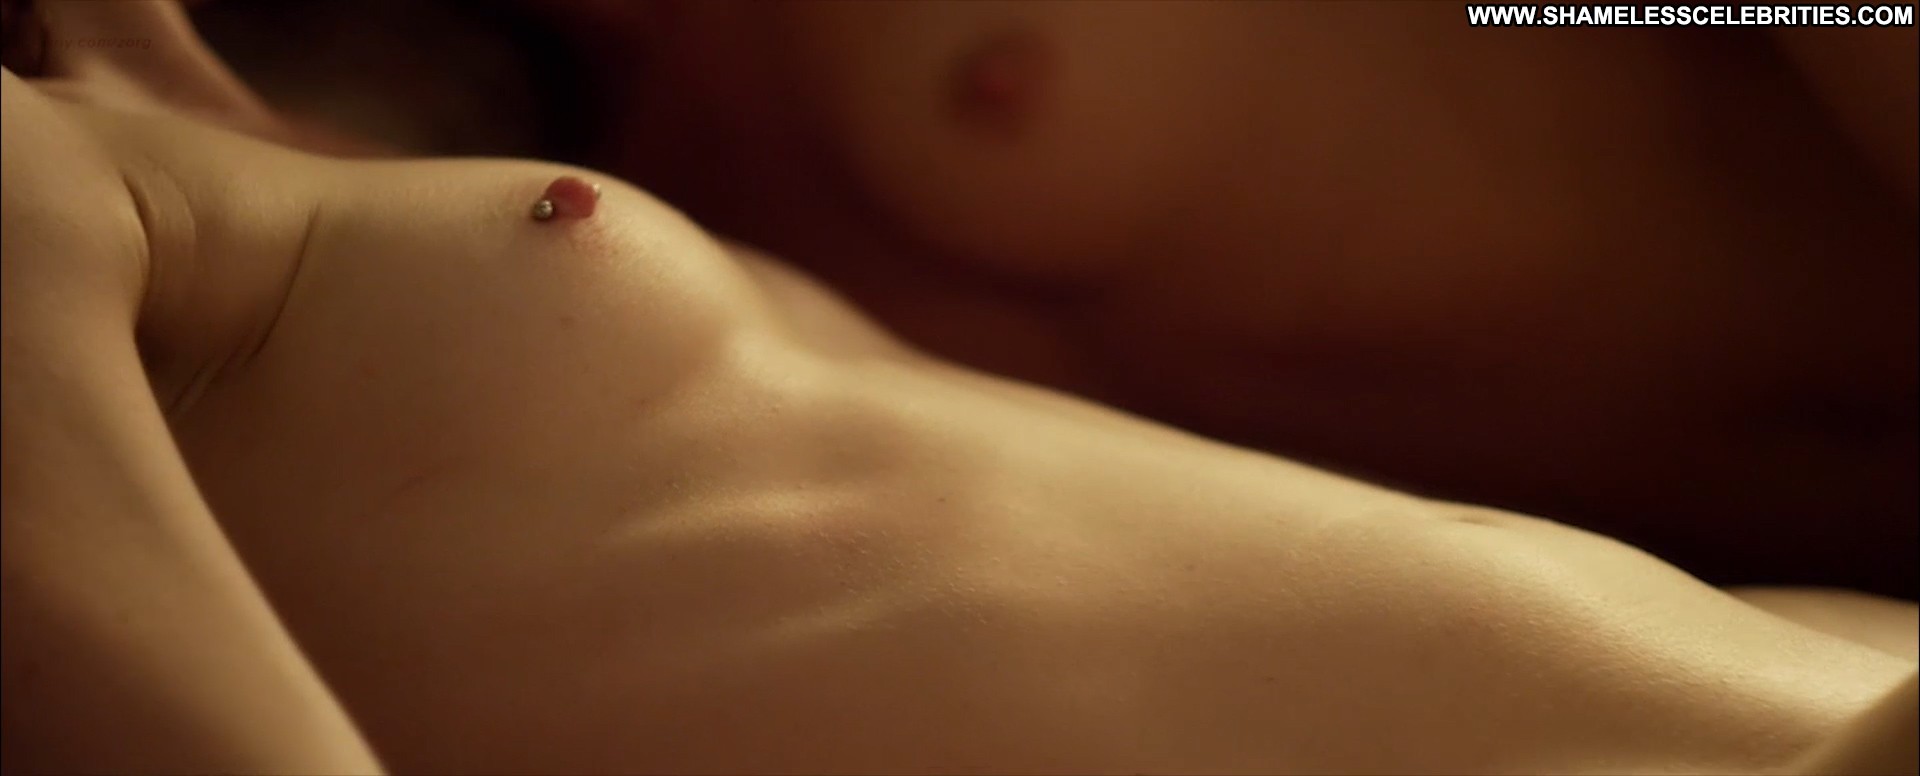 Jill Evy Sharon Hinnendael Anatomy Of Love Seen Celebrity Posing Hot Lesbian Nude Topless Sex